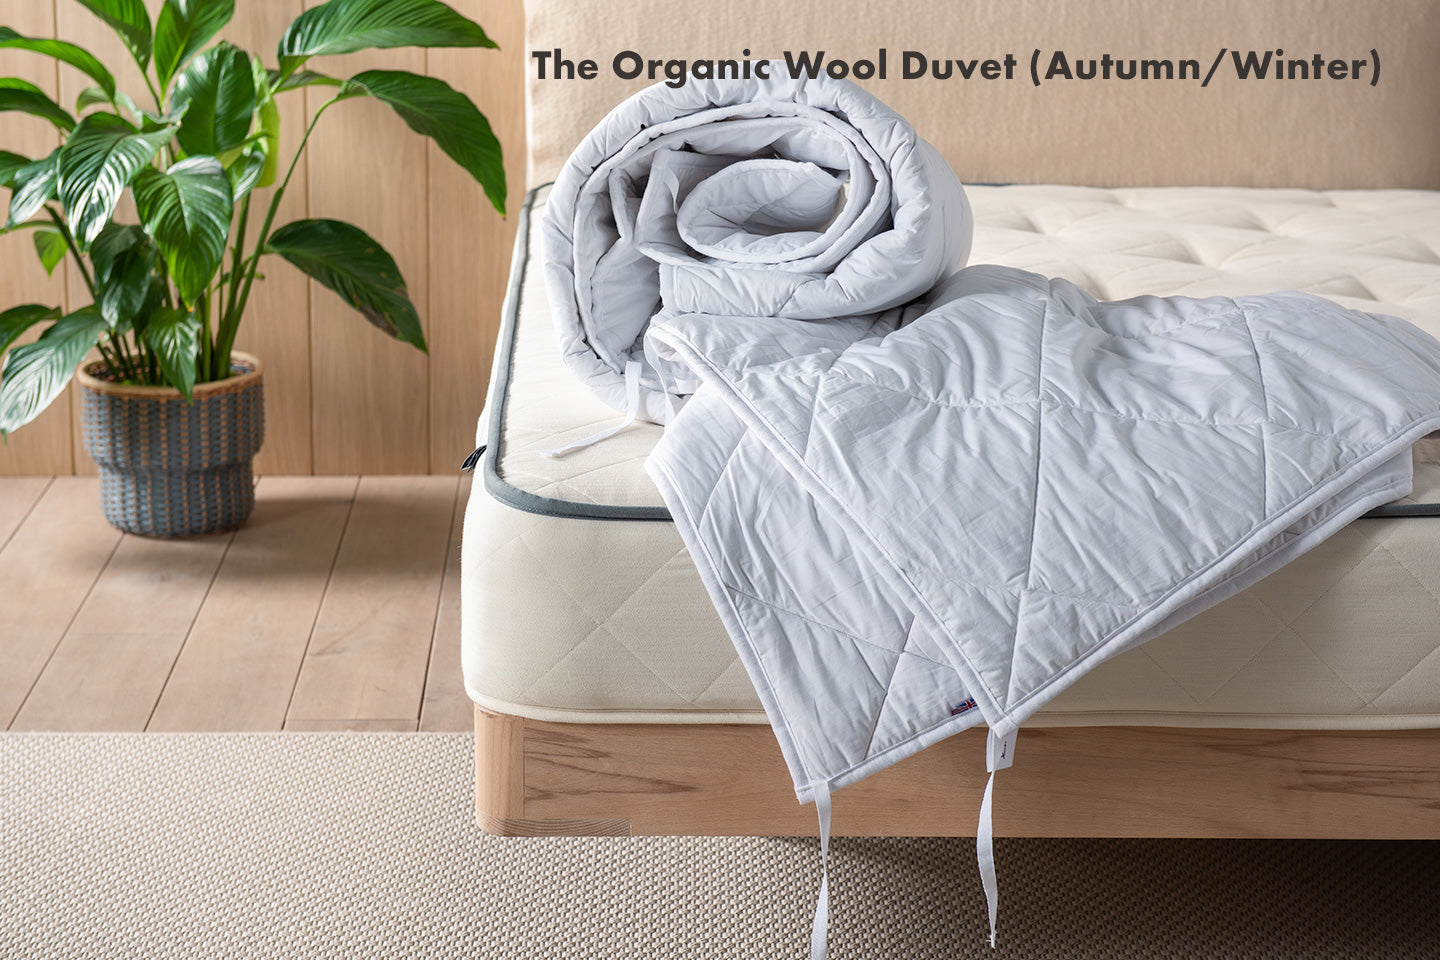 The Organic Wool Duvet - Autumn/Winter